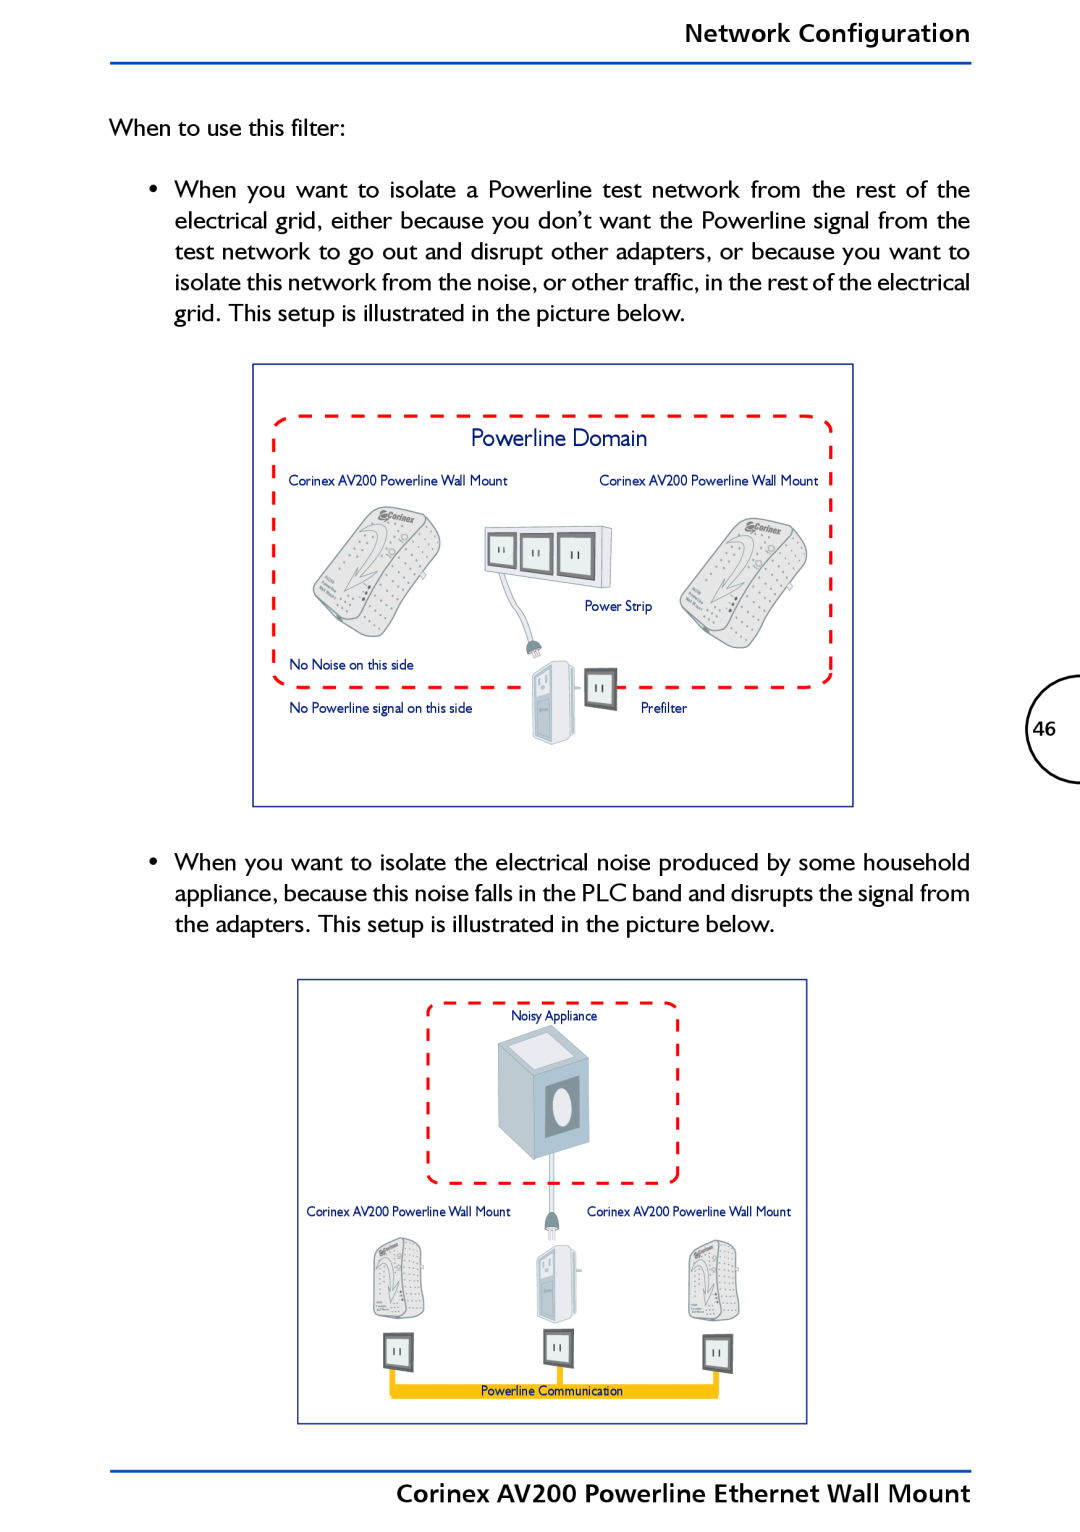 DeWalt manual Network Configuration, Powerline Domain, Corinex AV200 Powerline Ethernet Wall Mount 